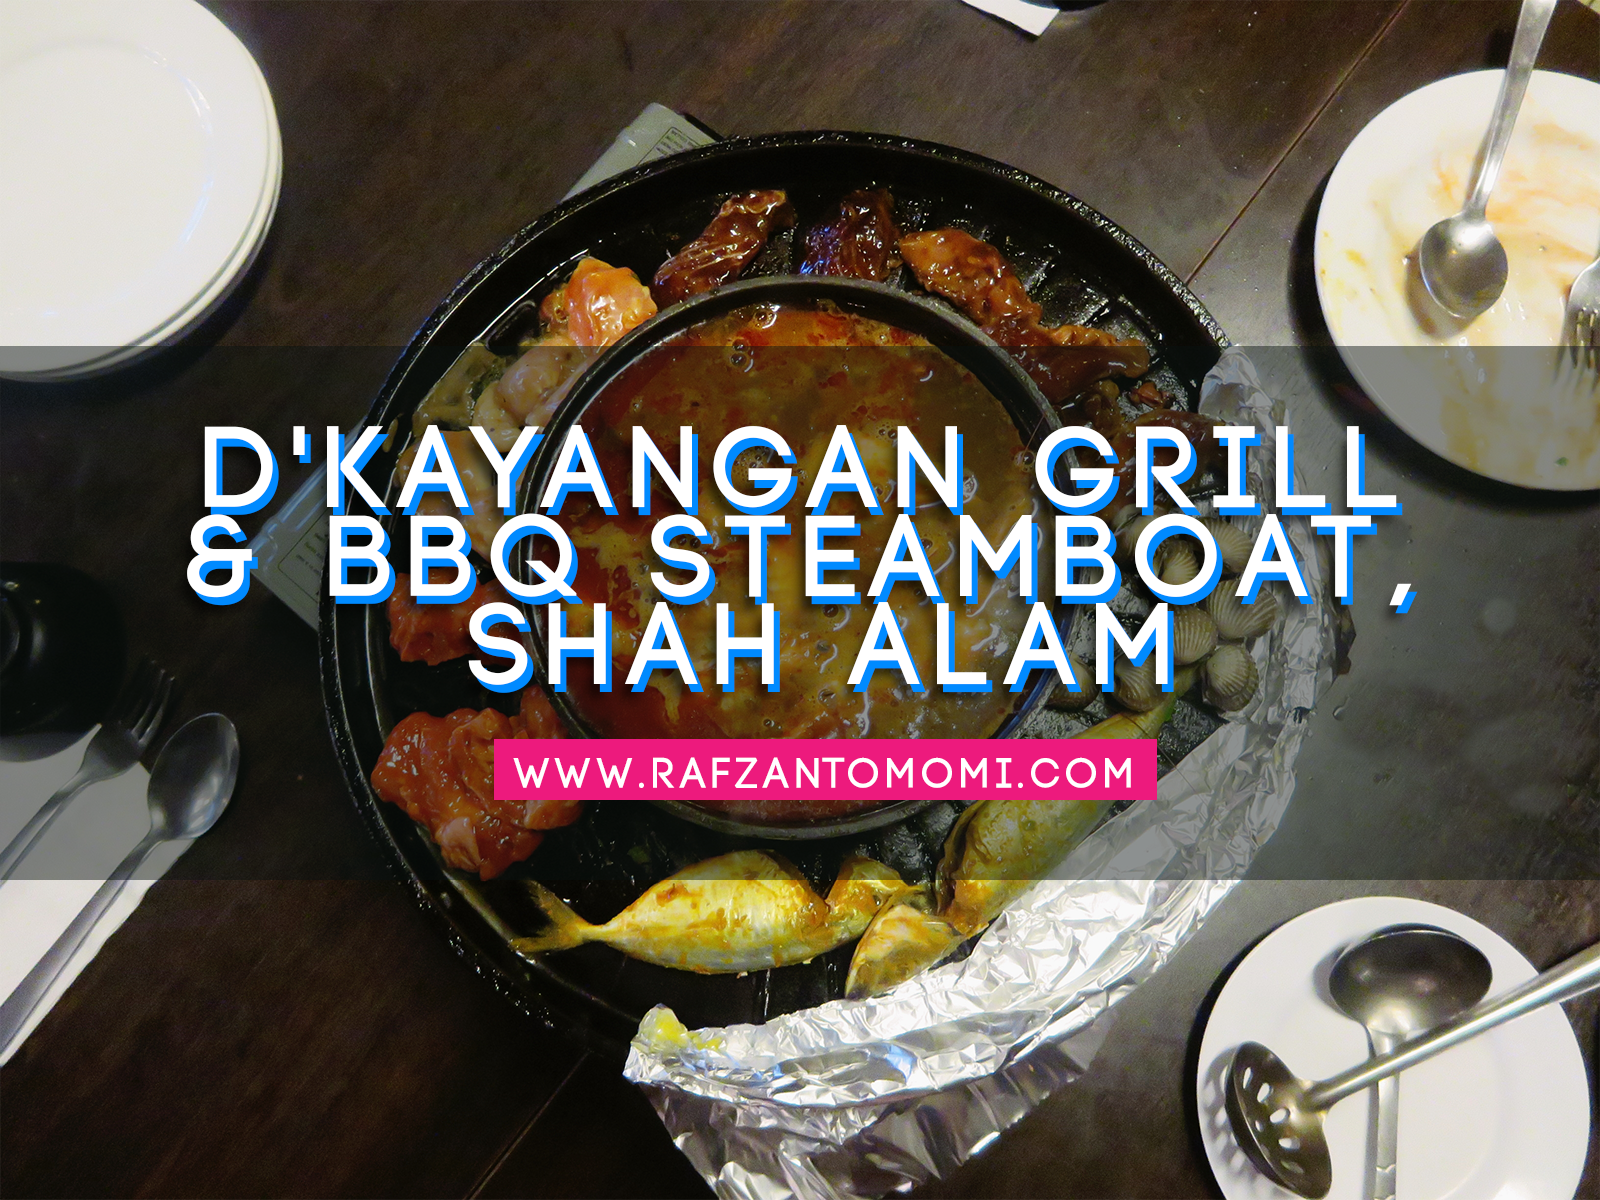 D'Kayangan Grill & BBQ Steamboat, Shah Alam - Harga Steamboat Serendah RM9.90!